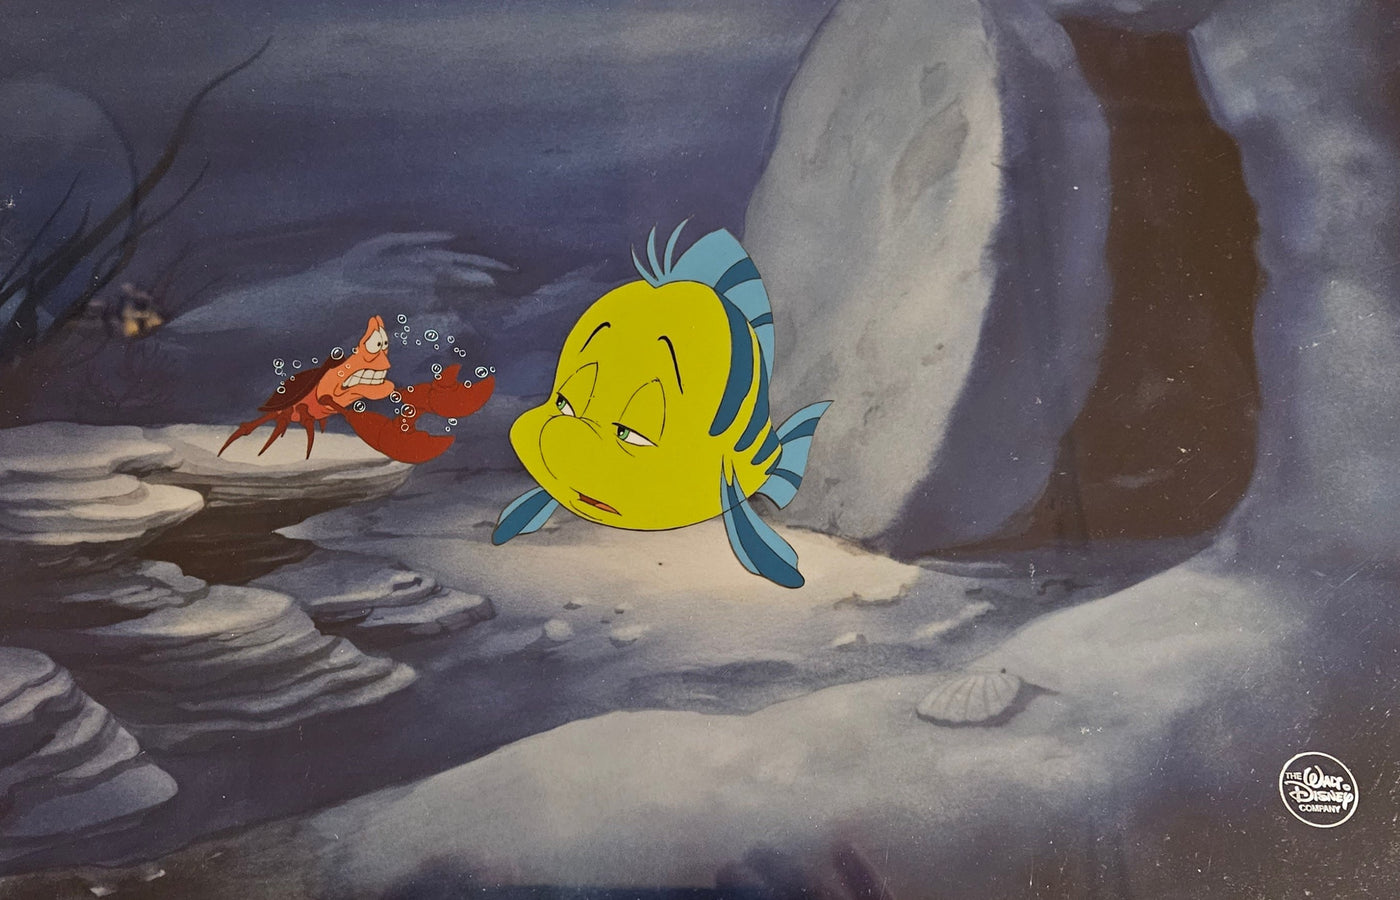 Original Walt Disney Production Cel from The Little Mermaid featuring Sebastian and Flounder